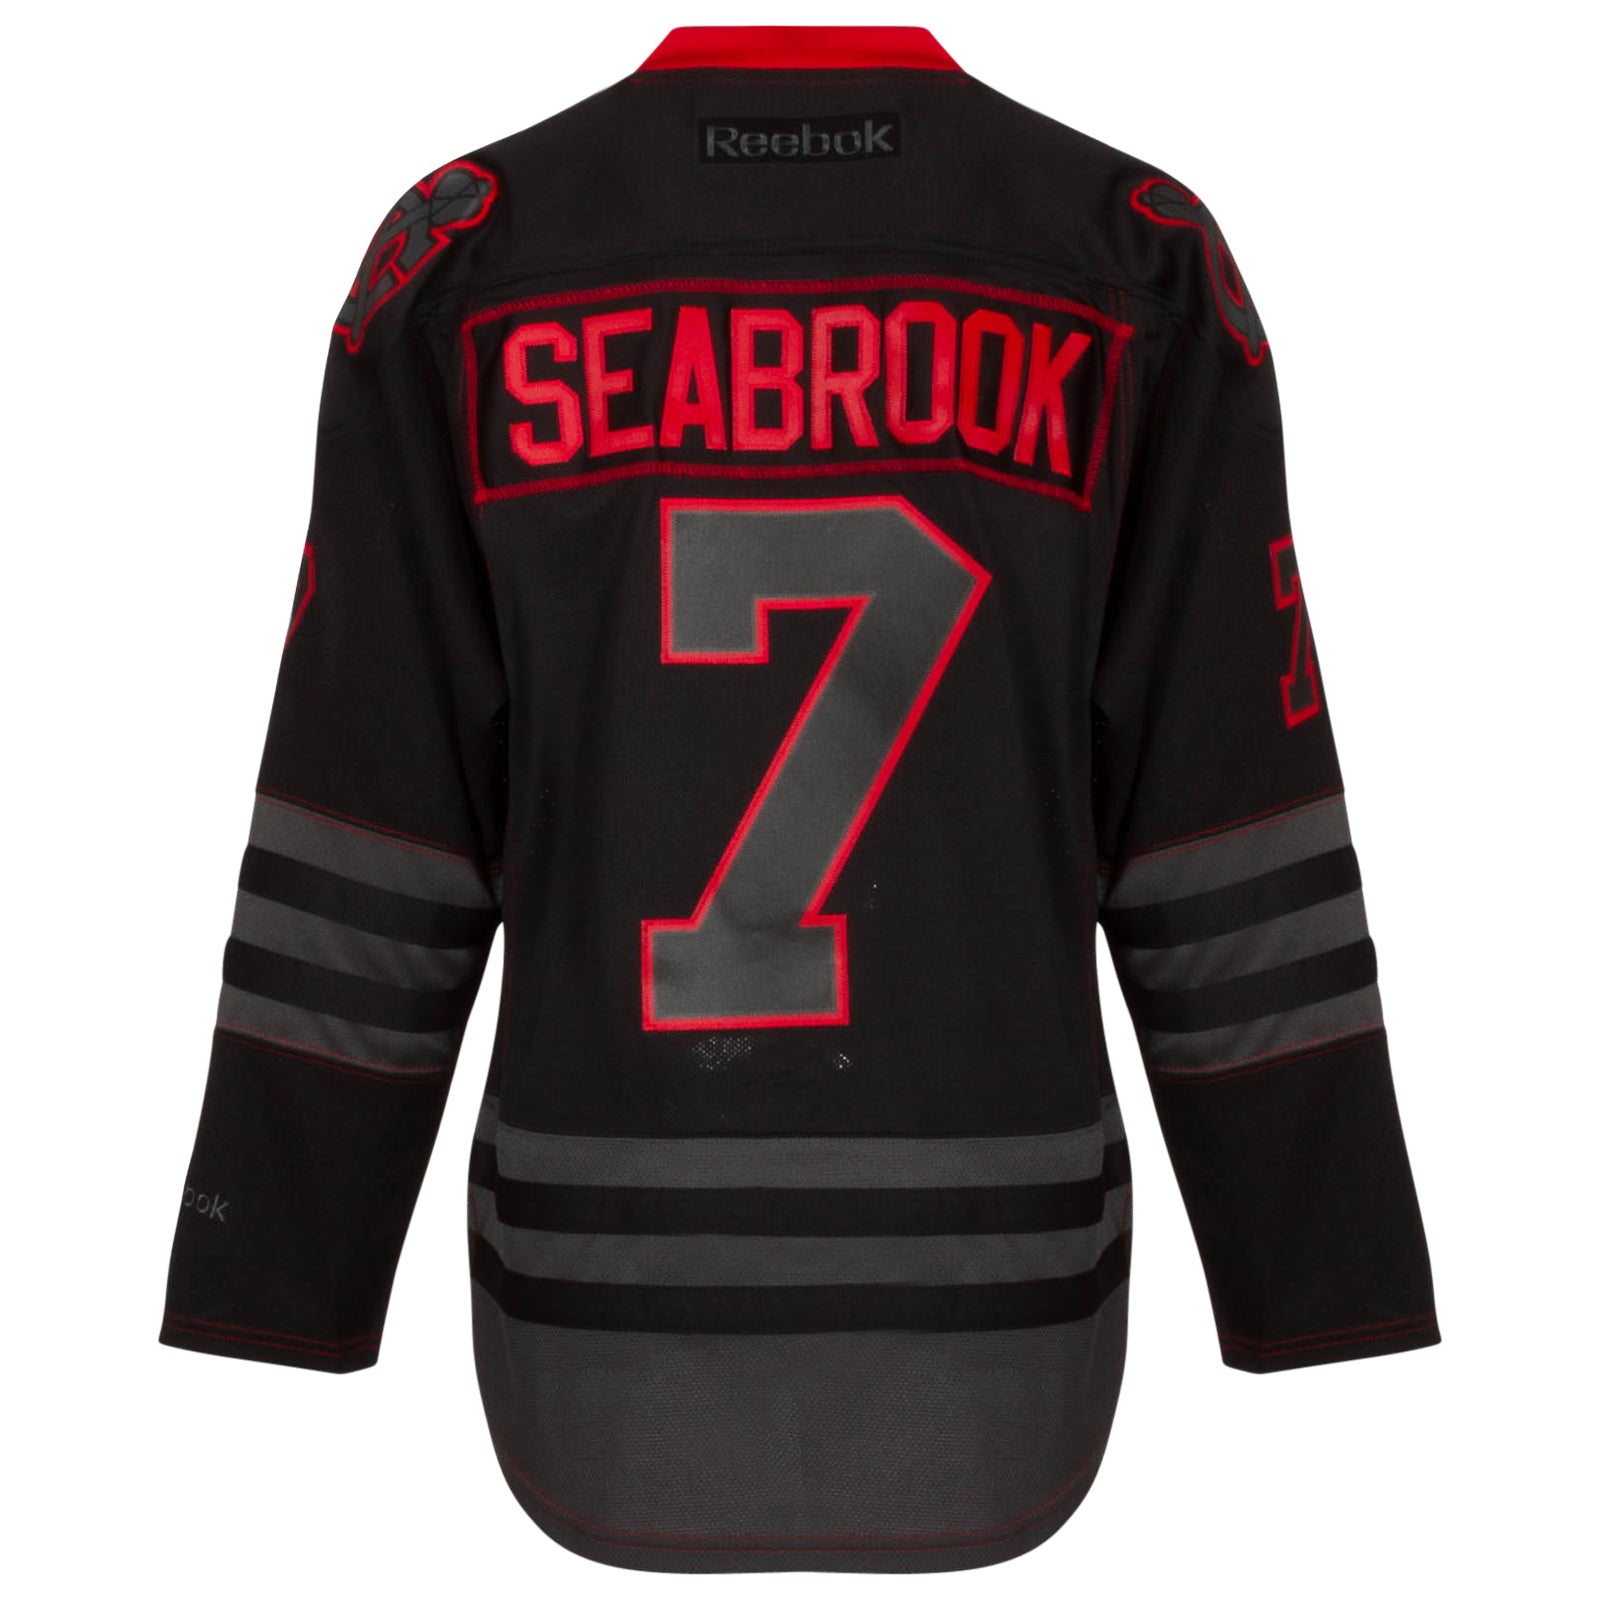 black seabrook jersey